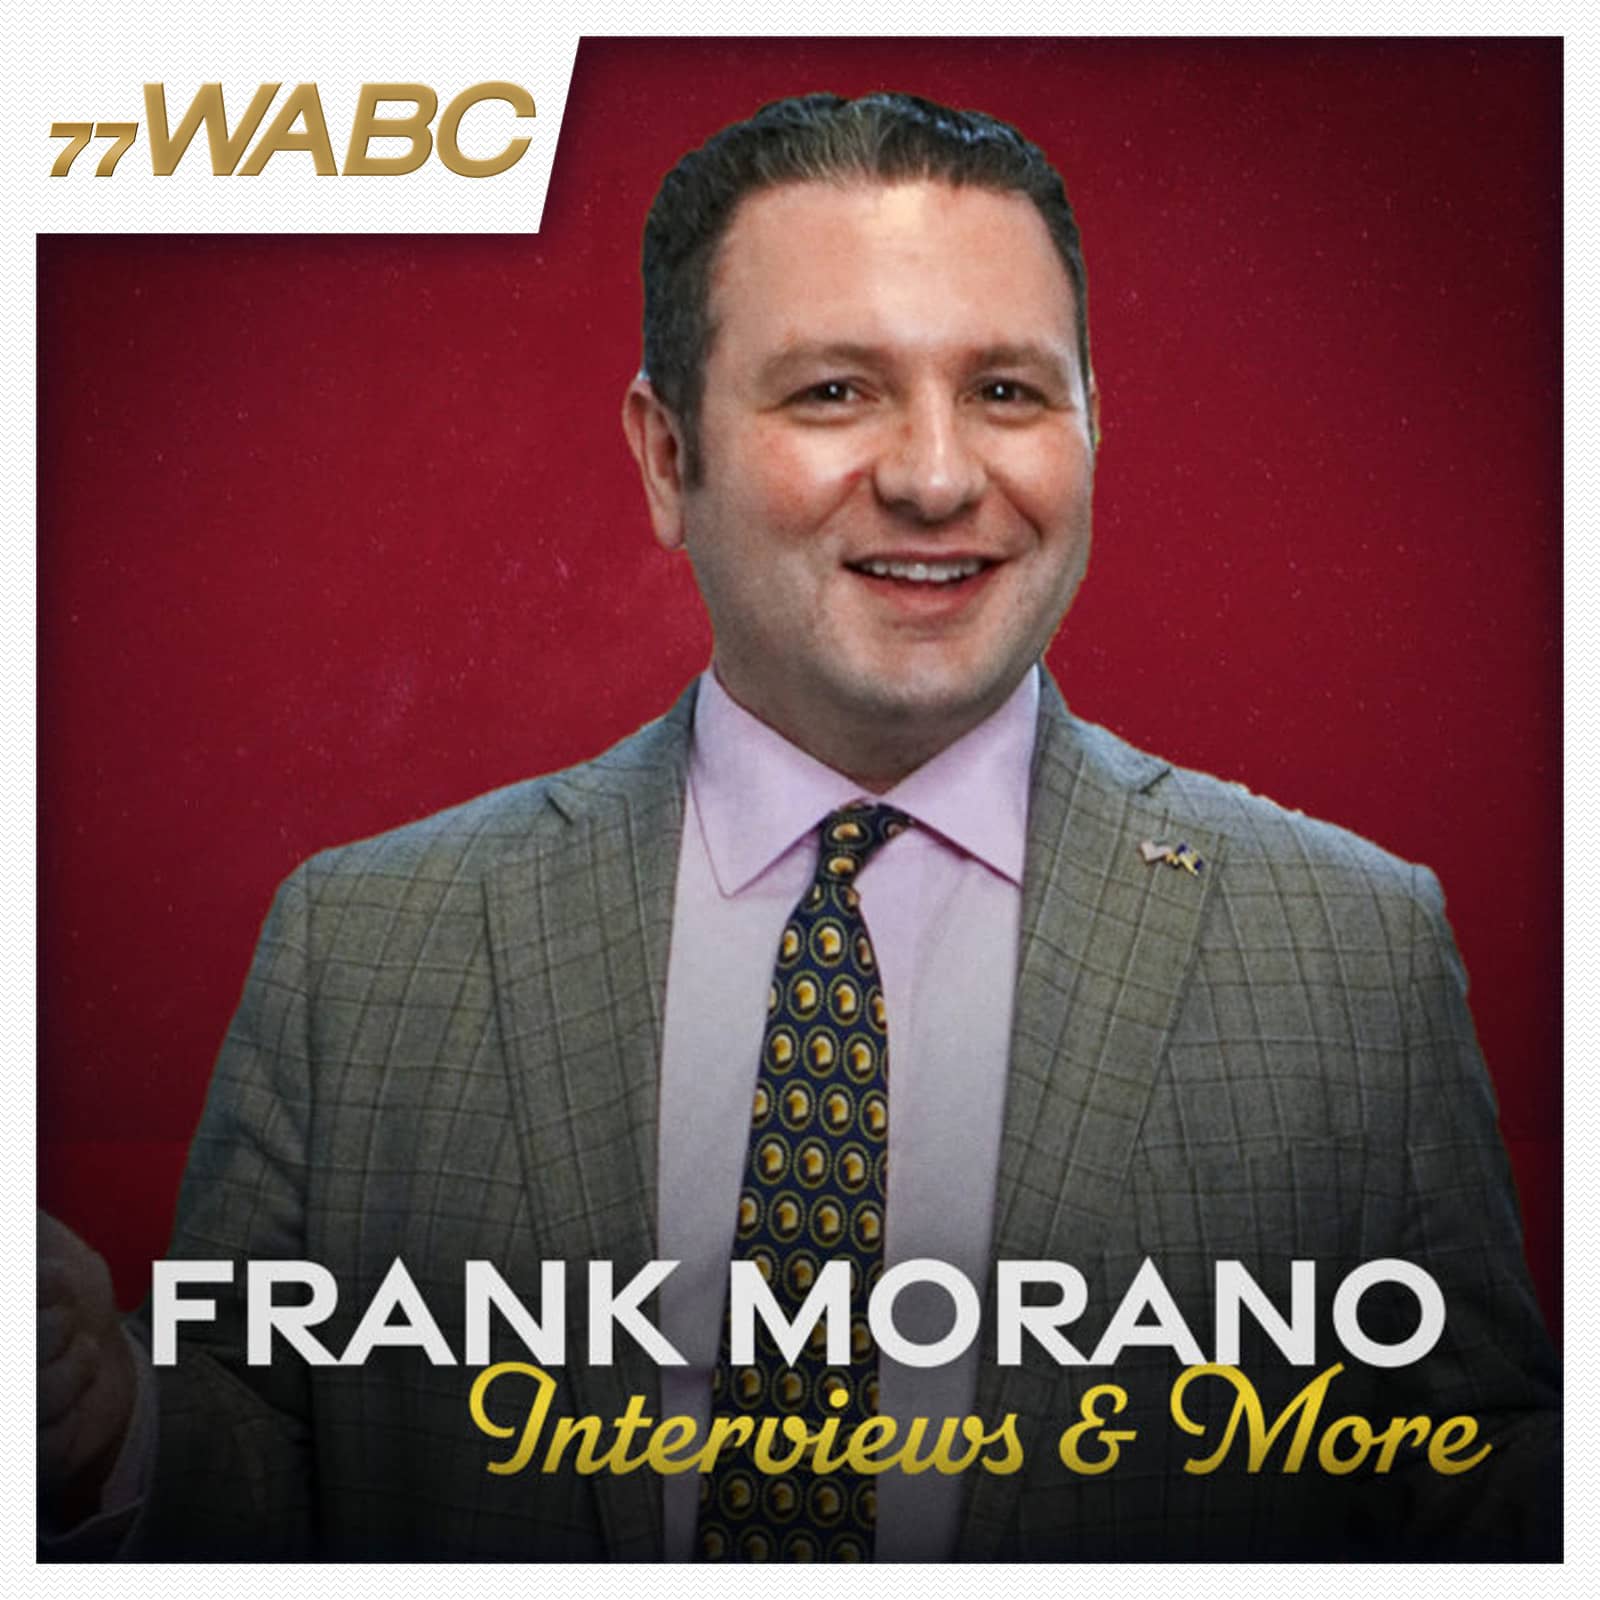 frank-morano-interviews-and-more-podcast-new-logo-326